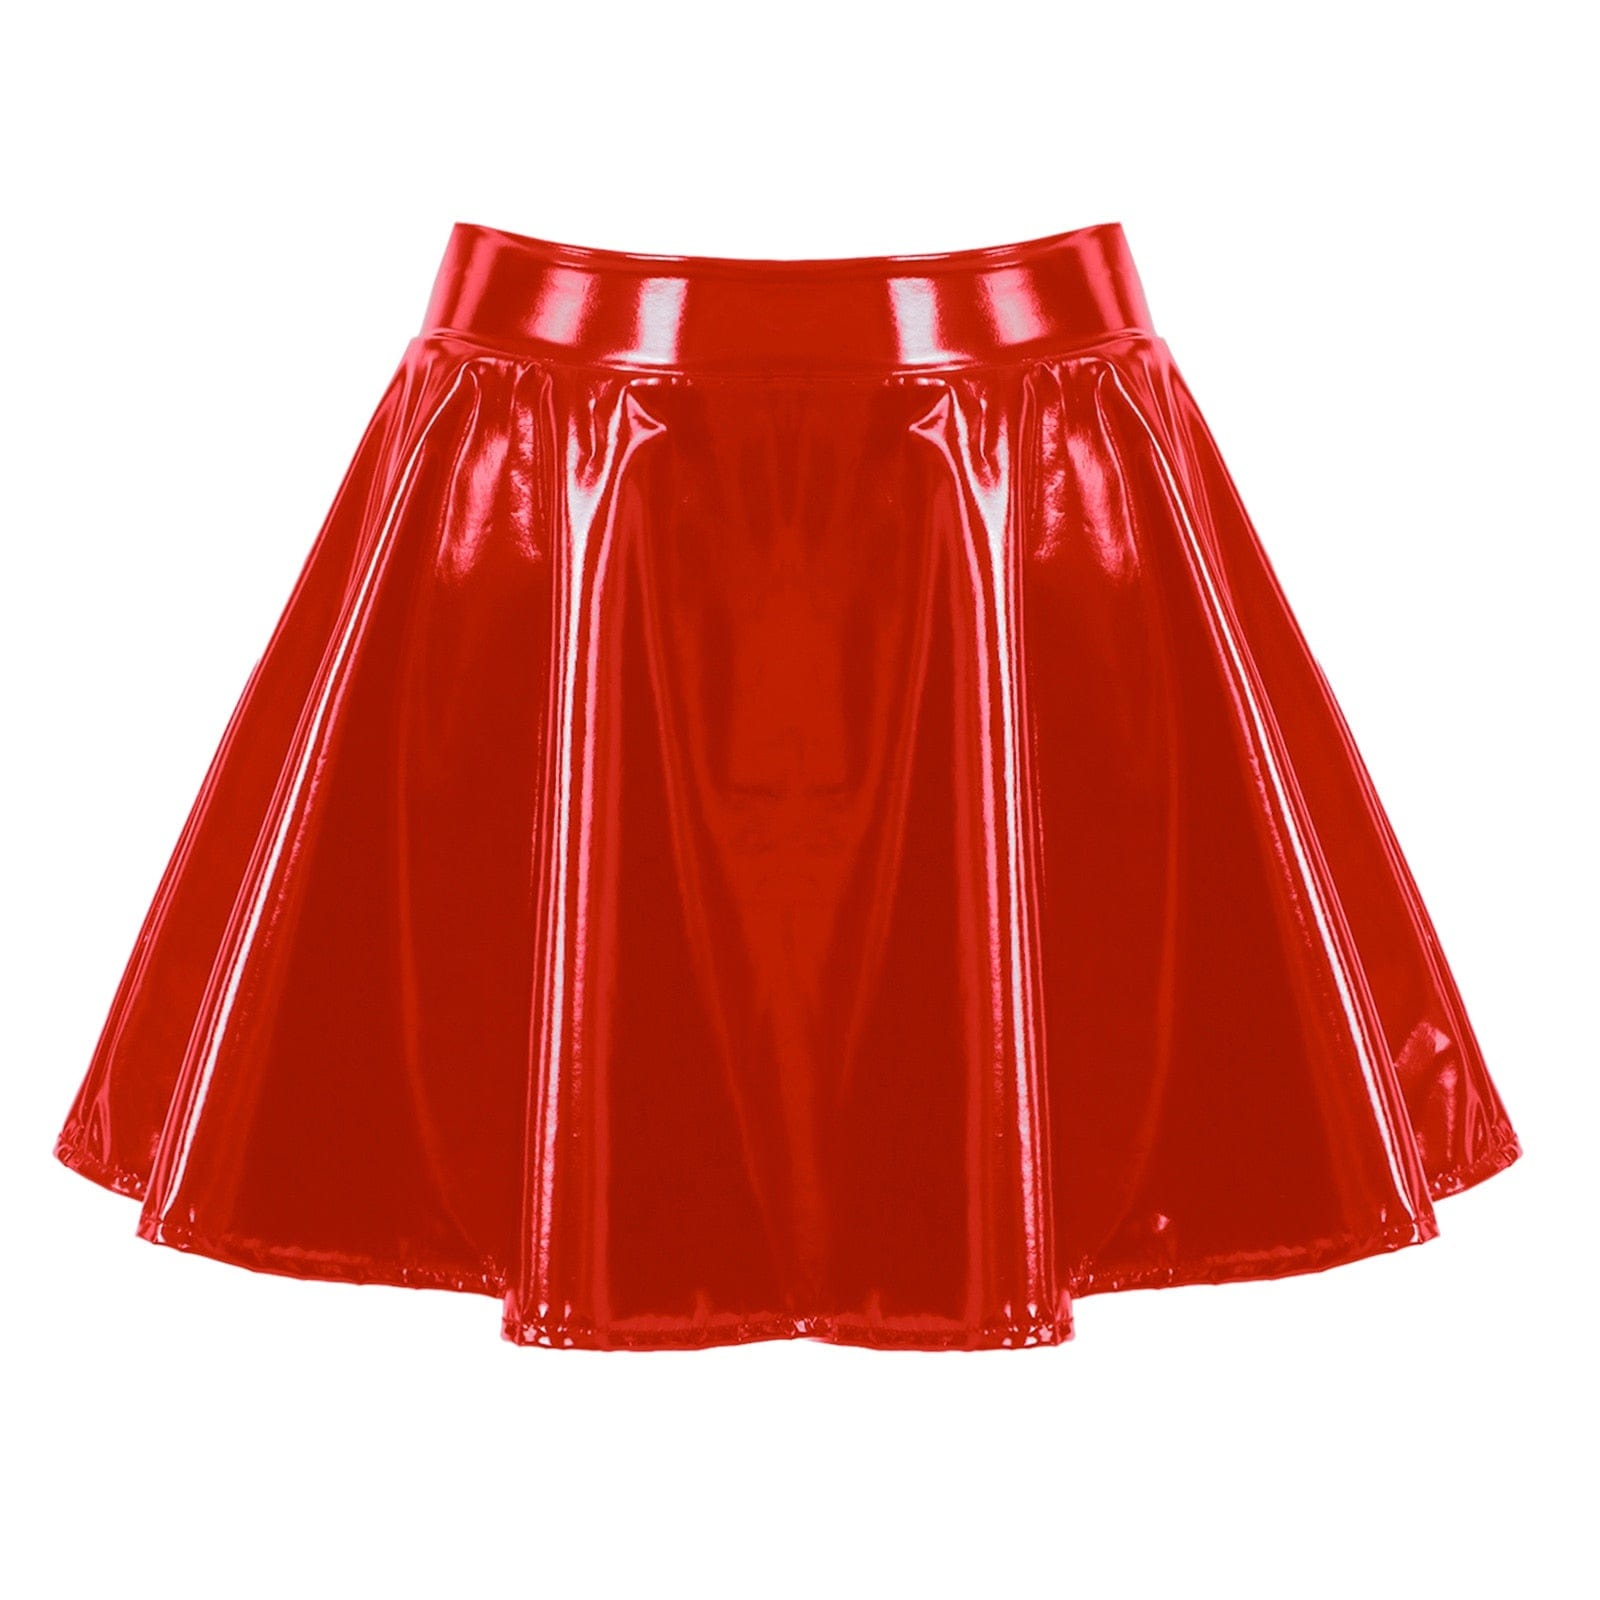 Kinky Cloth Red / S Shiny Leather Flared Miniskirt